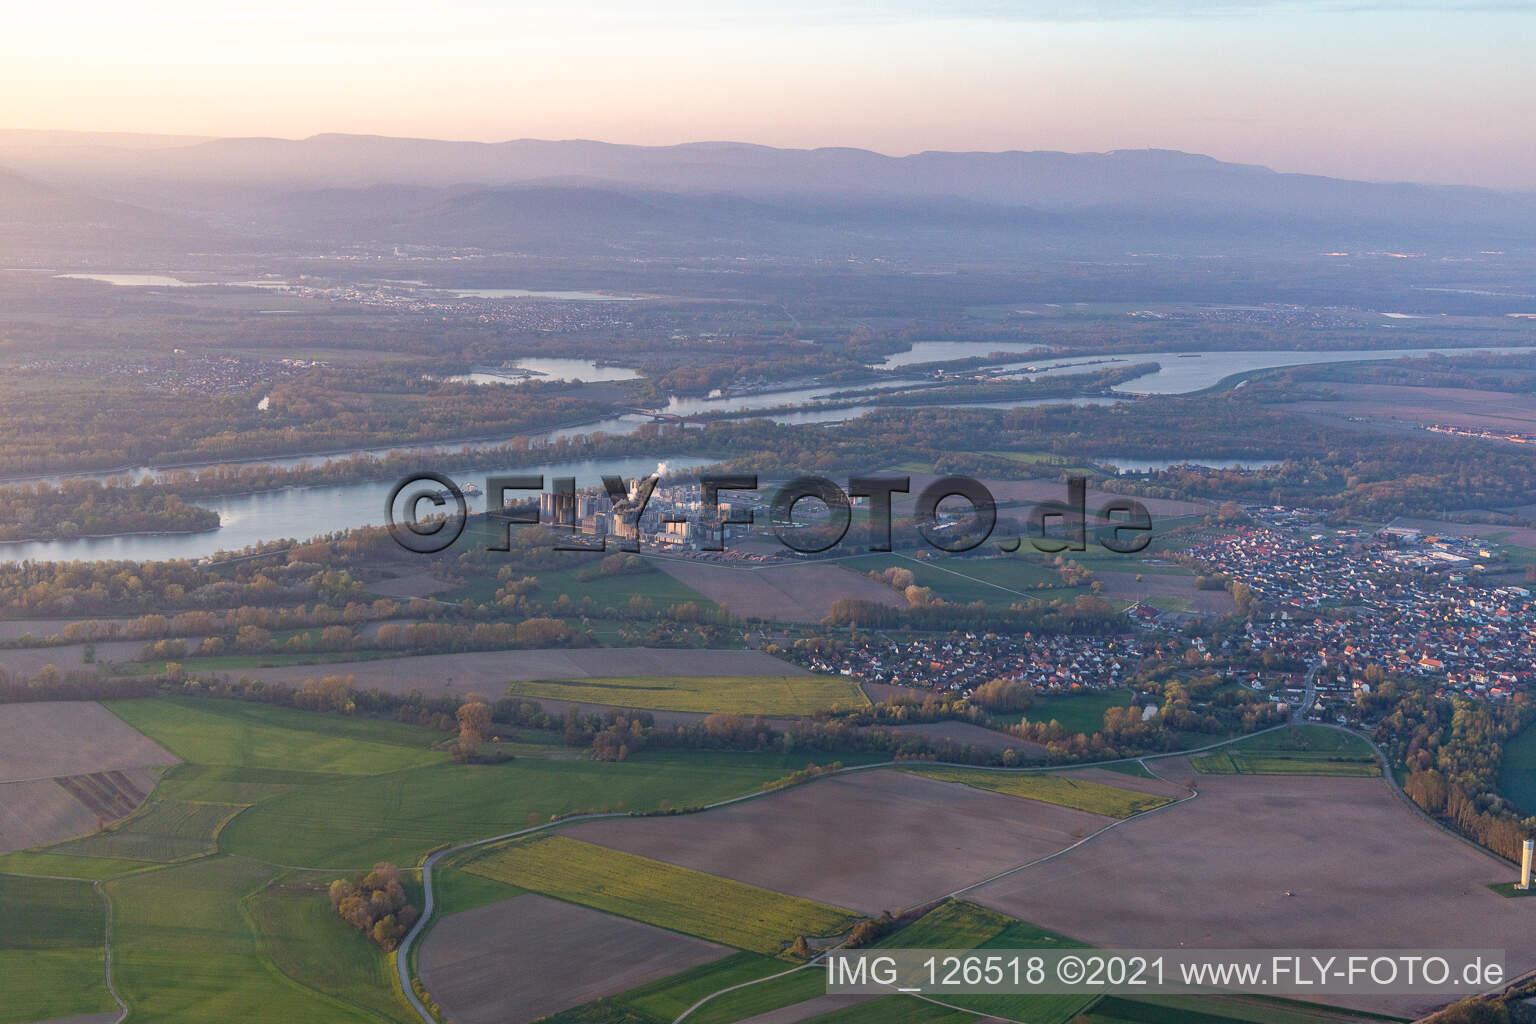 Beinheim in the state Bas-Rhin, France viewn from the air